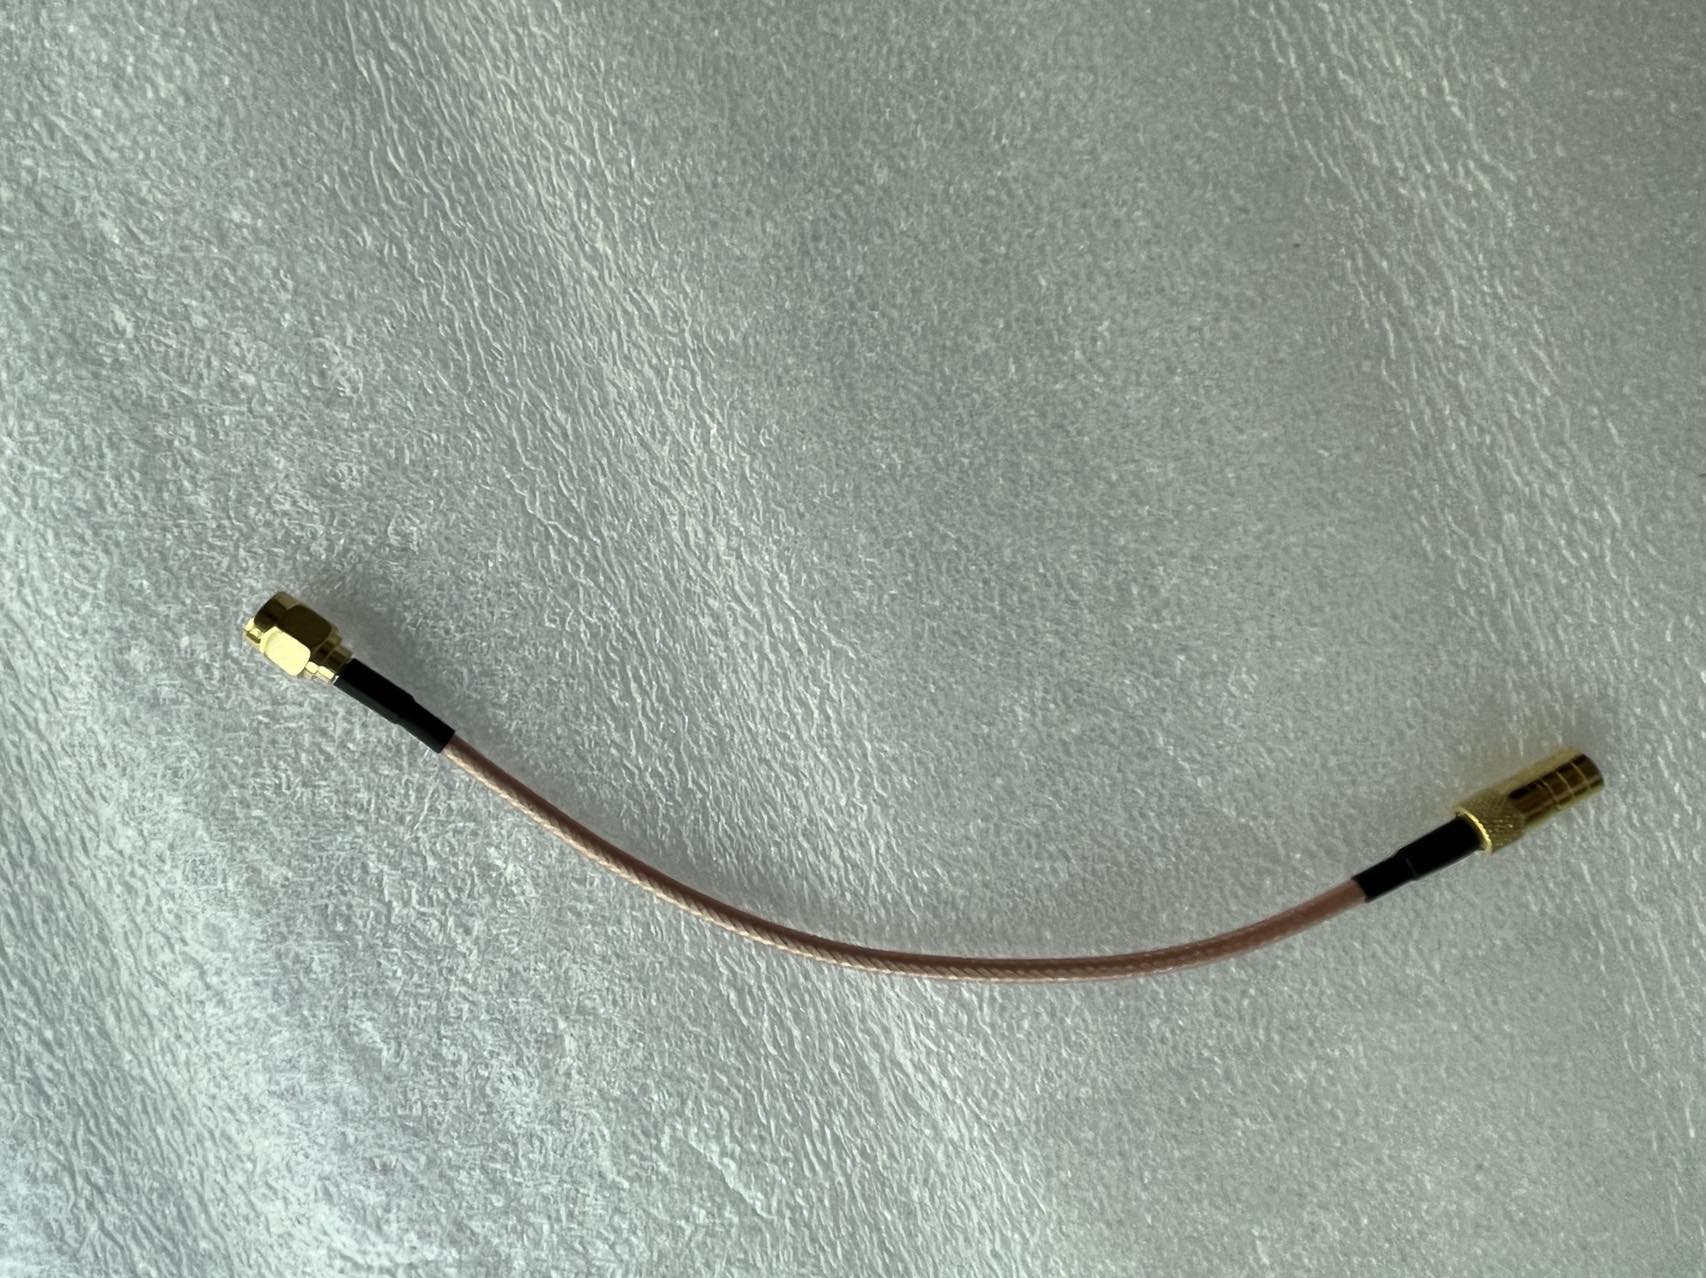 Tip Transformer Wire TTW Sensor Cable for Fiber Laser Cutting Head Raytools Bm111 Bm109 Bm114 Bm115